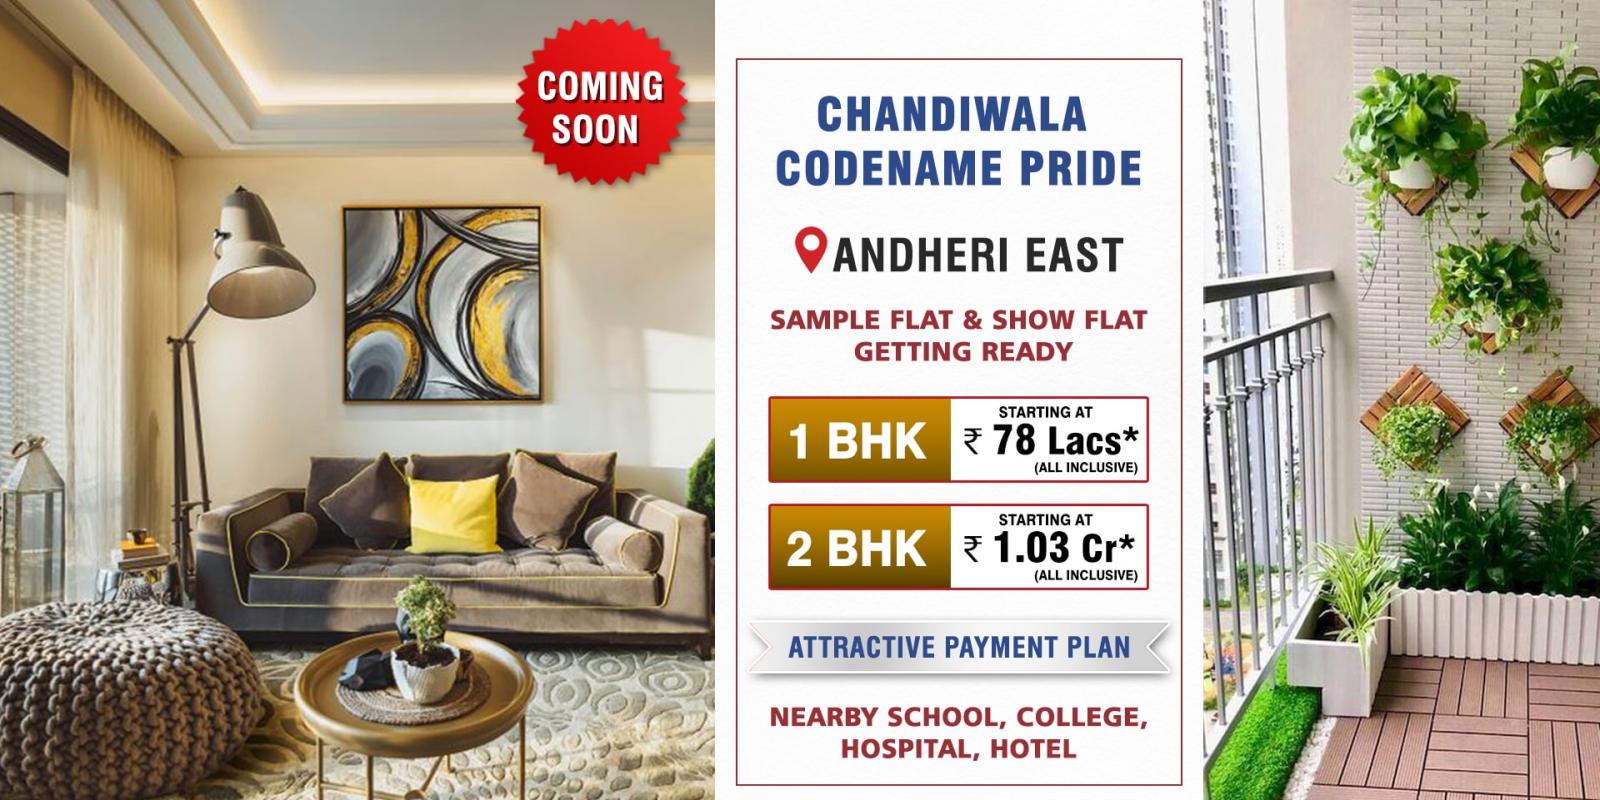 Codename Pride andheri east-chndiwala banner-min.jpg